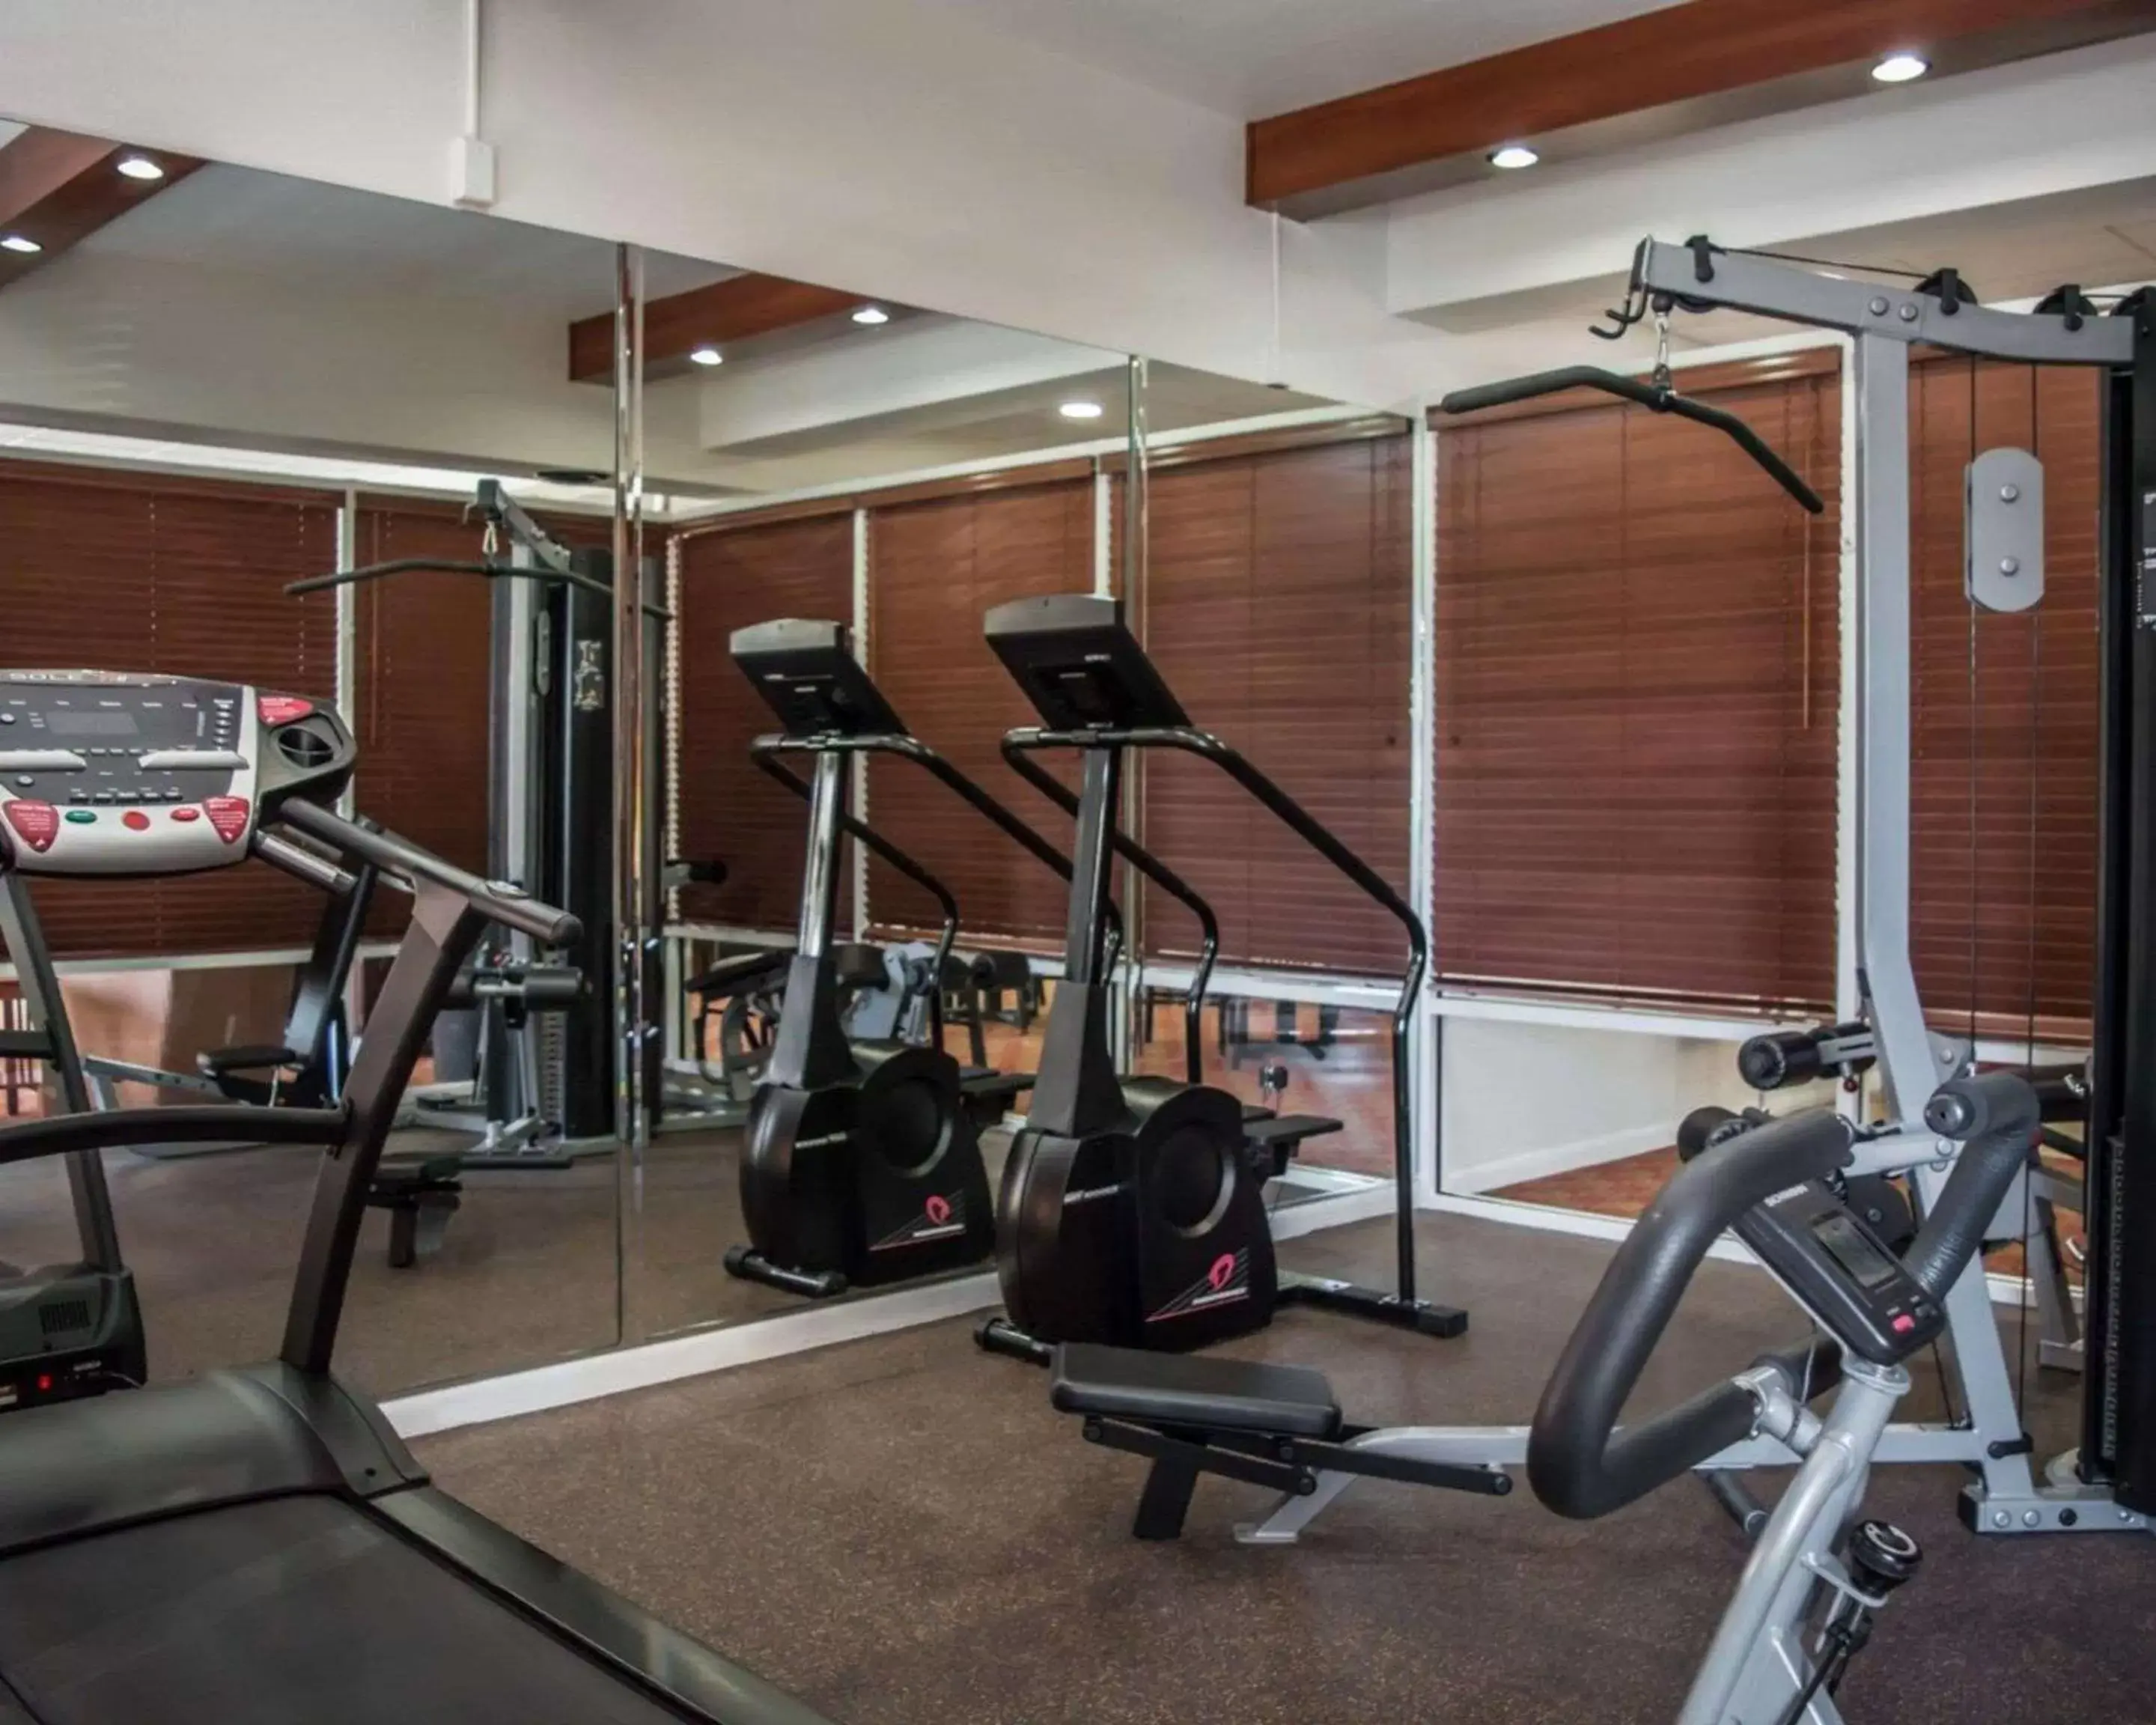 Fitness centre/facilities, Fitness Center/Facilities in Quality Inn - Weeki Wachee